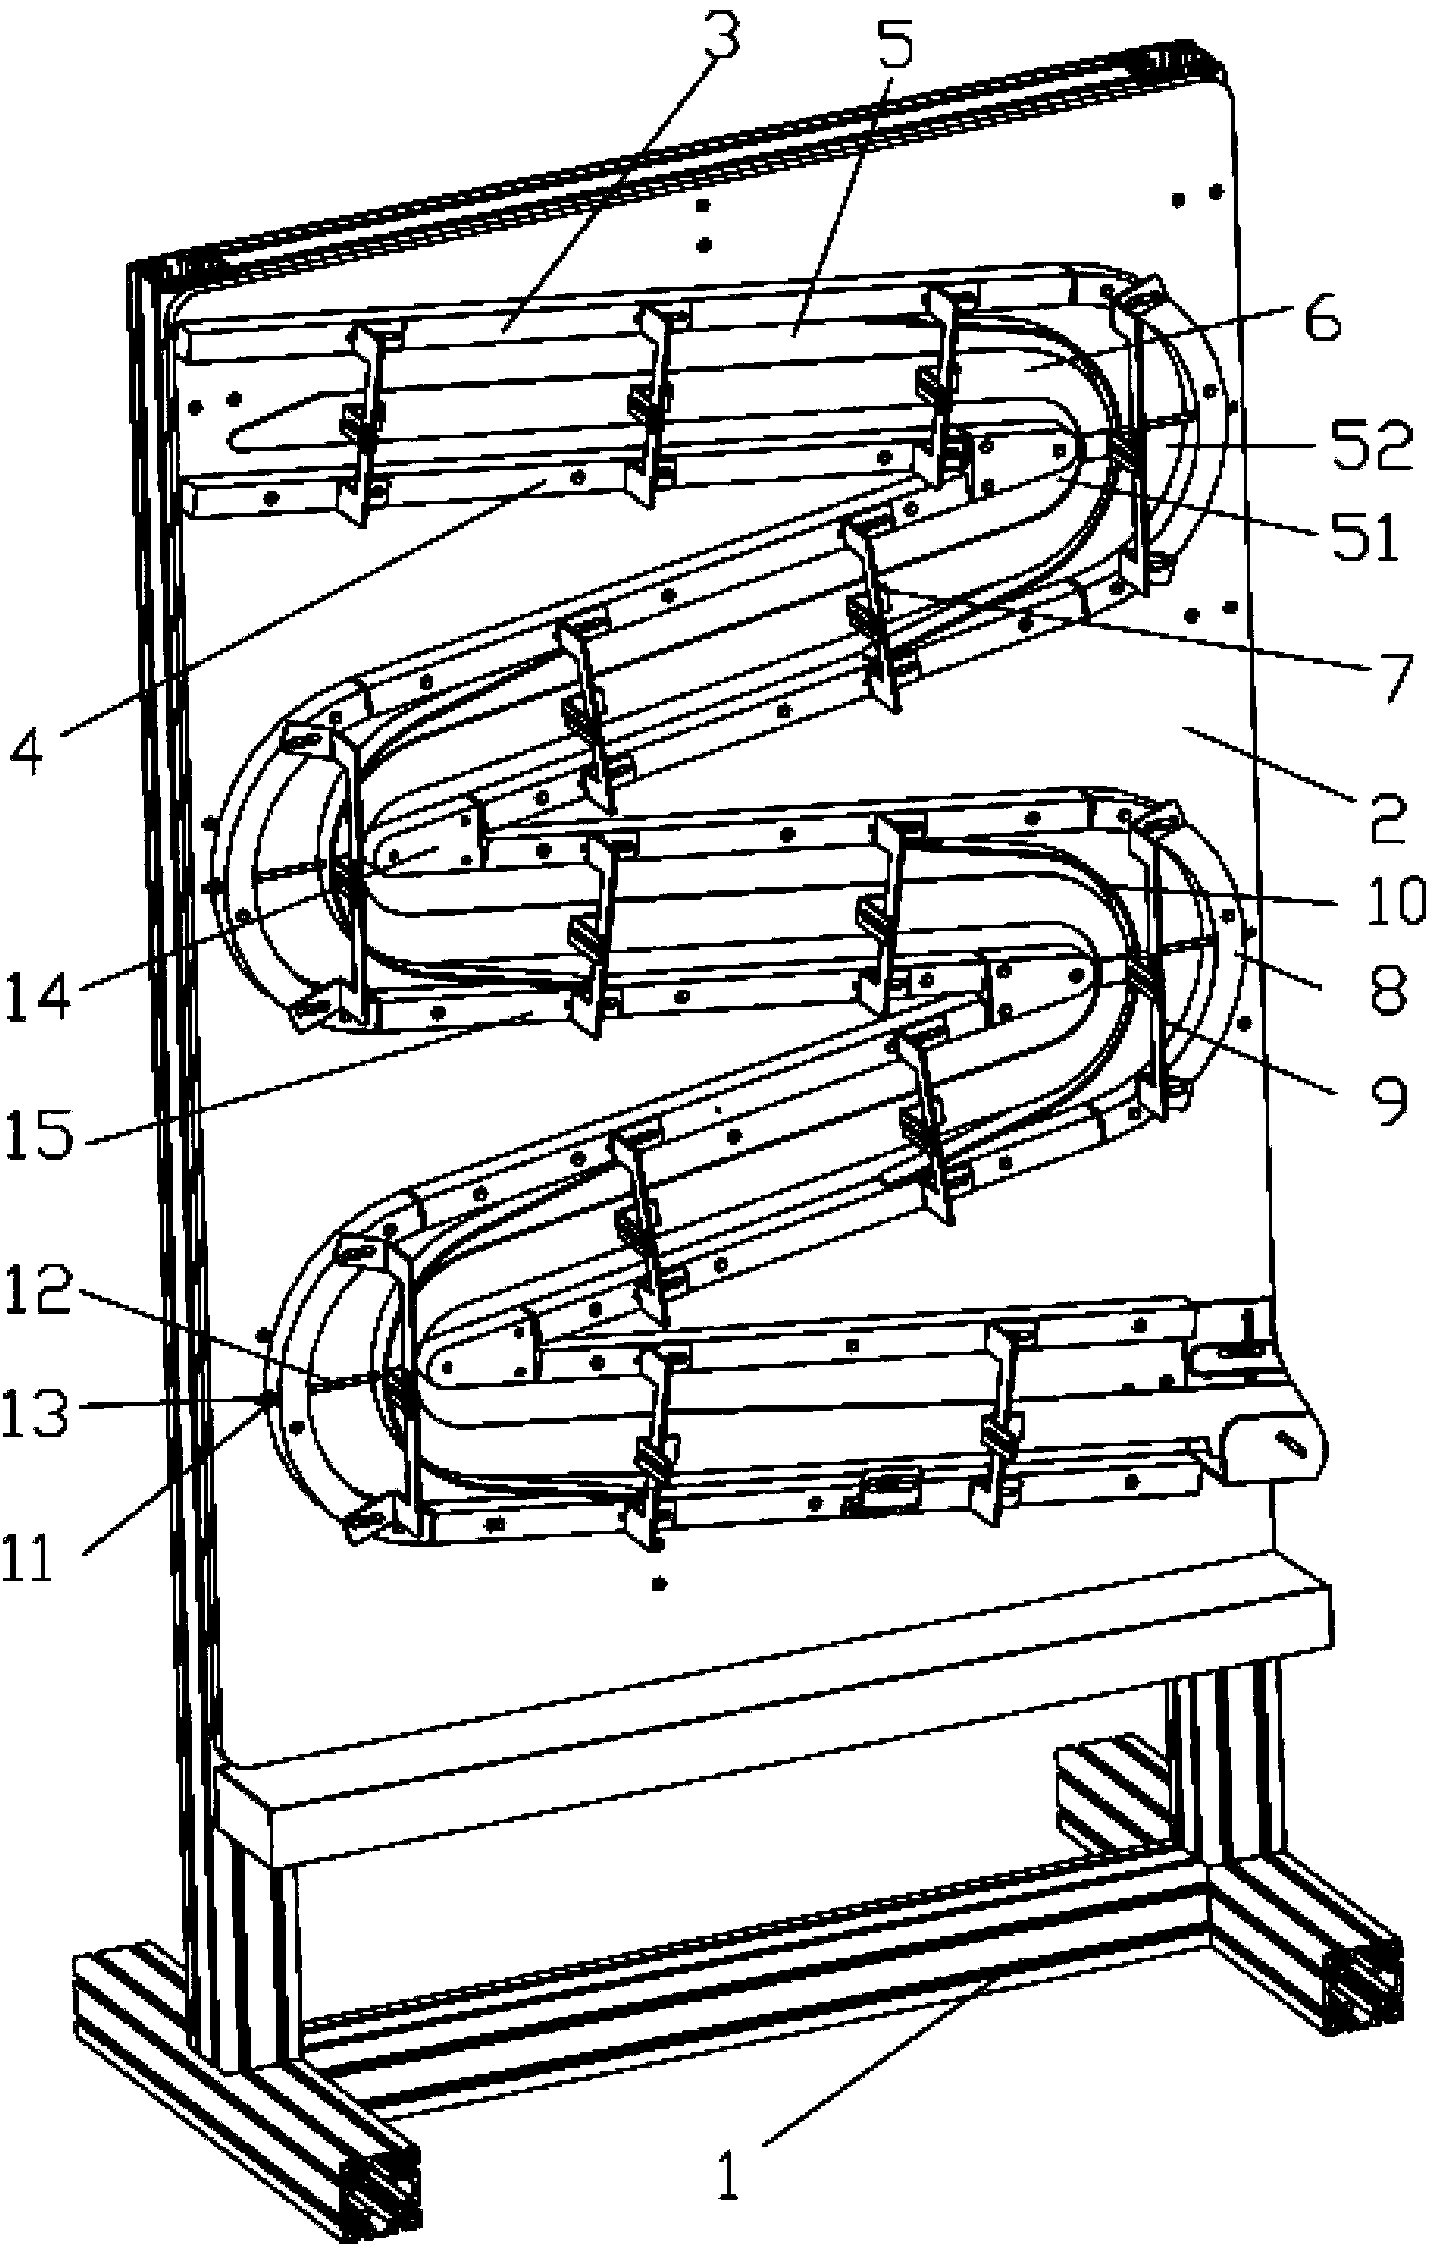 Bearing S-shaped material-loading frame